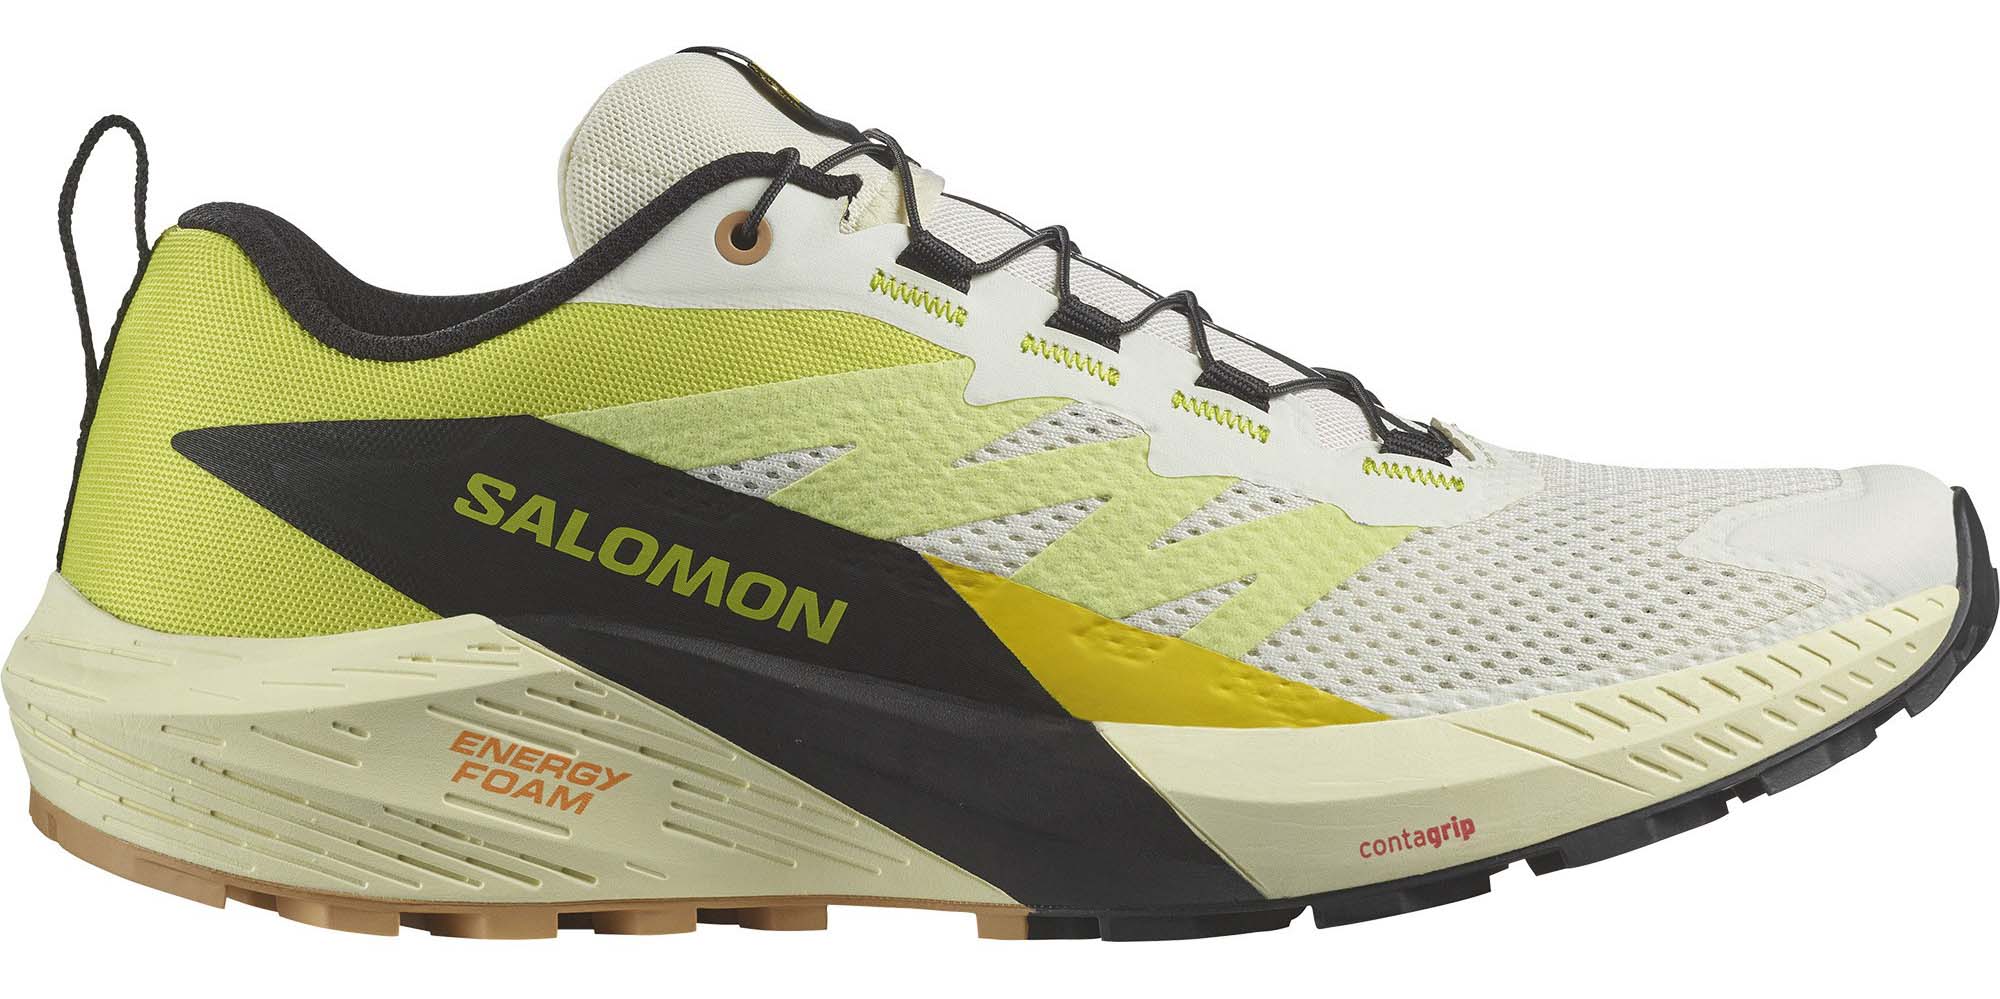 Salomon Sense Ride 5 trail running shoe